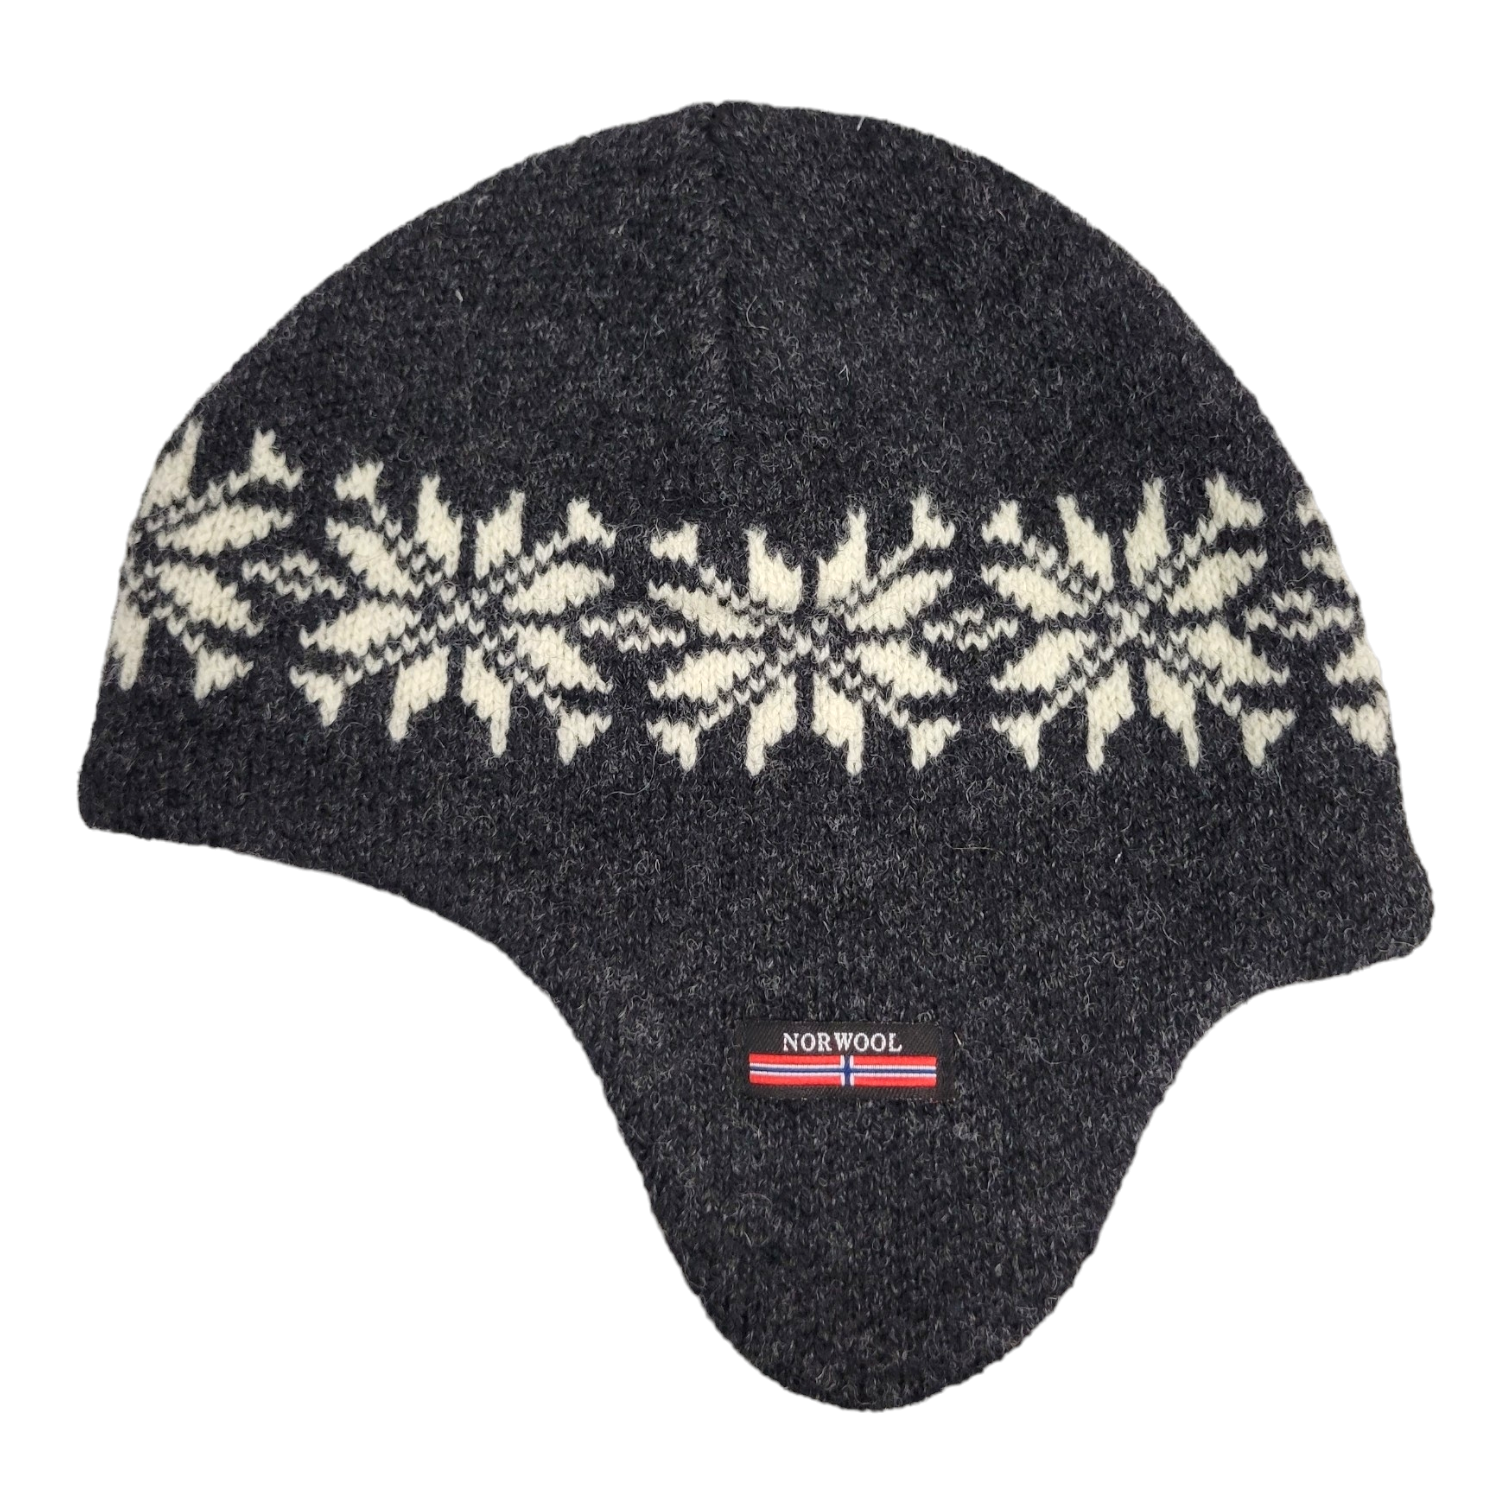 Hat: Norwool - Charcoal Selbu Star Hat w/ Ear Flaps